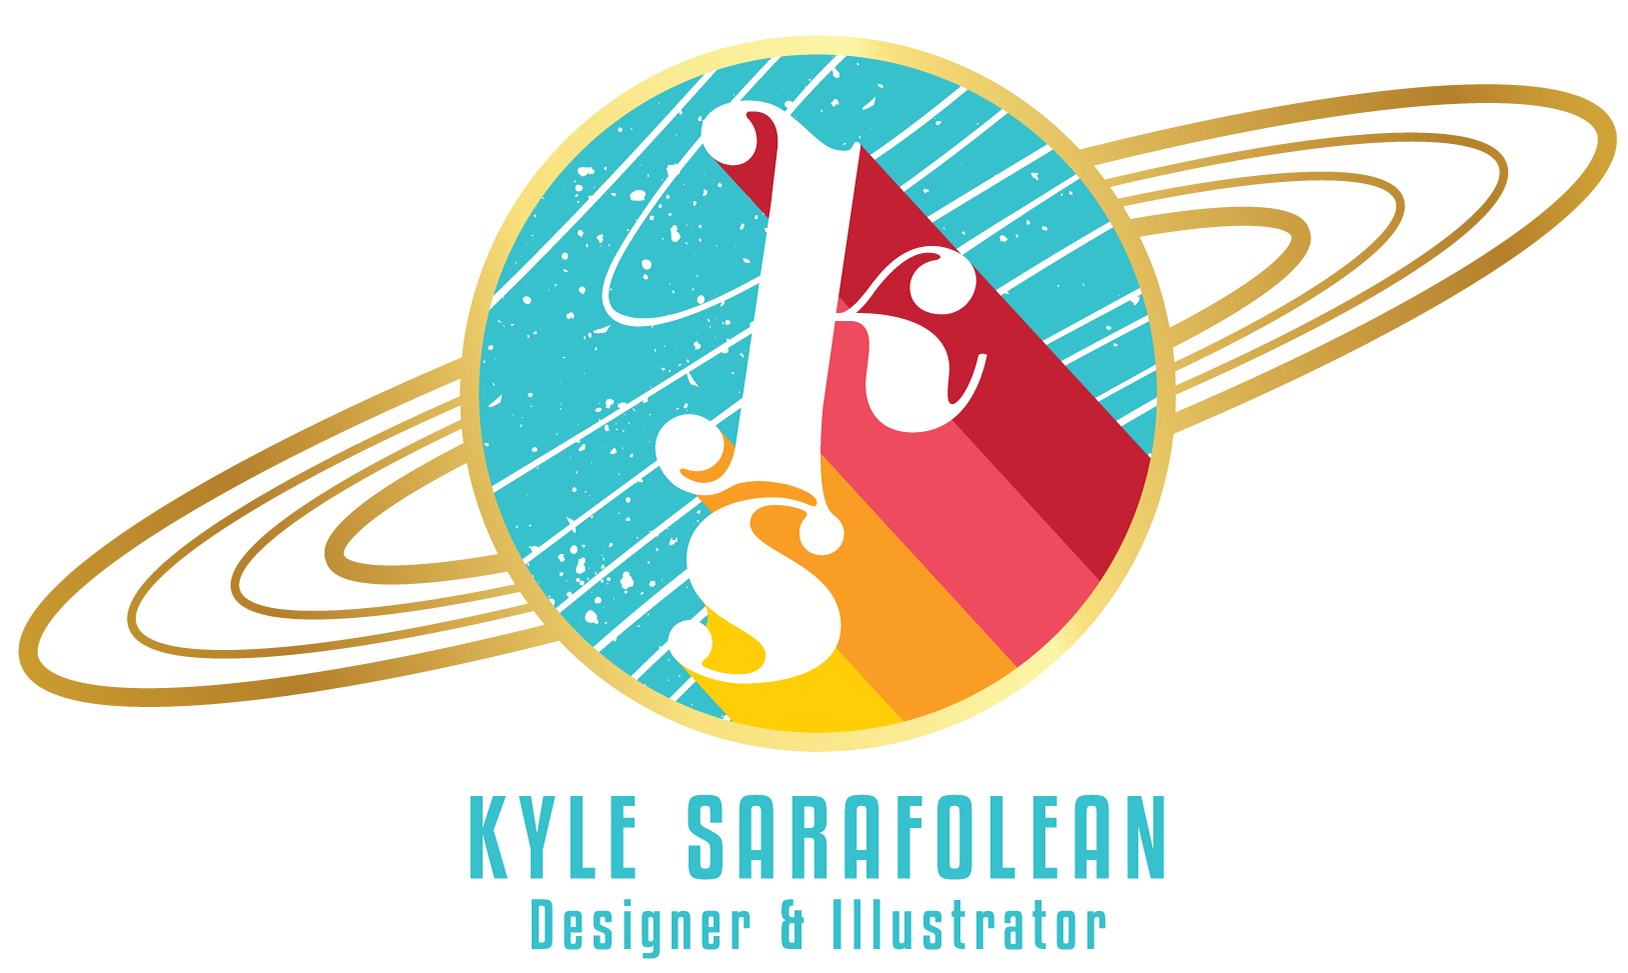 Kyle Sarafolean